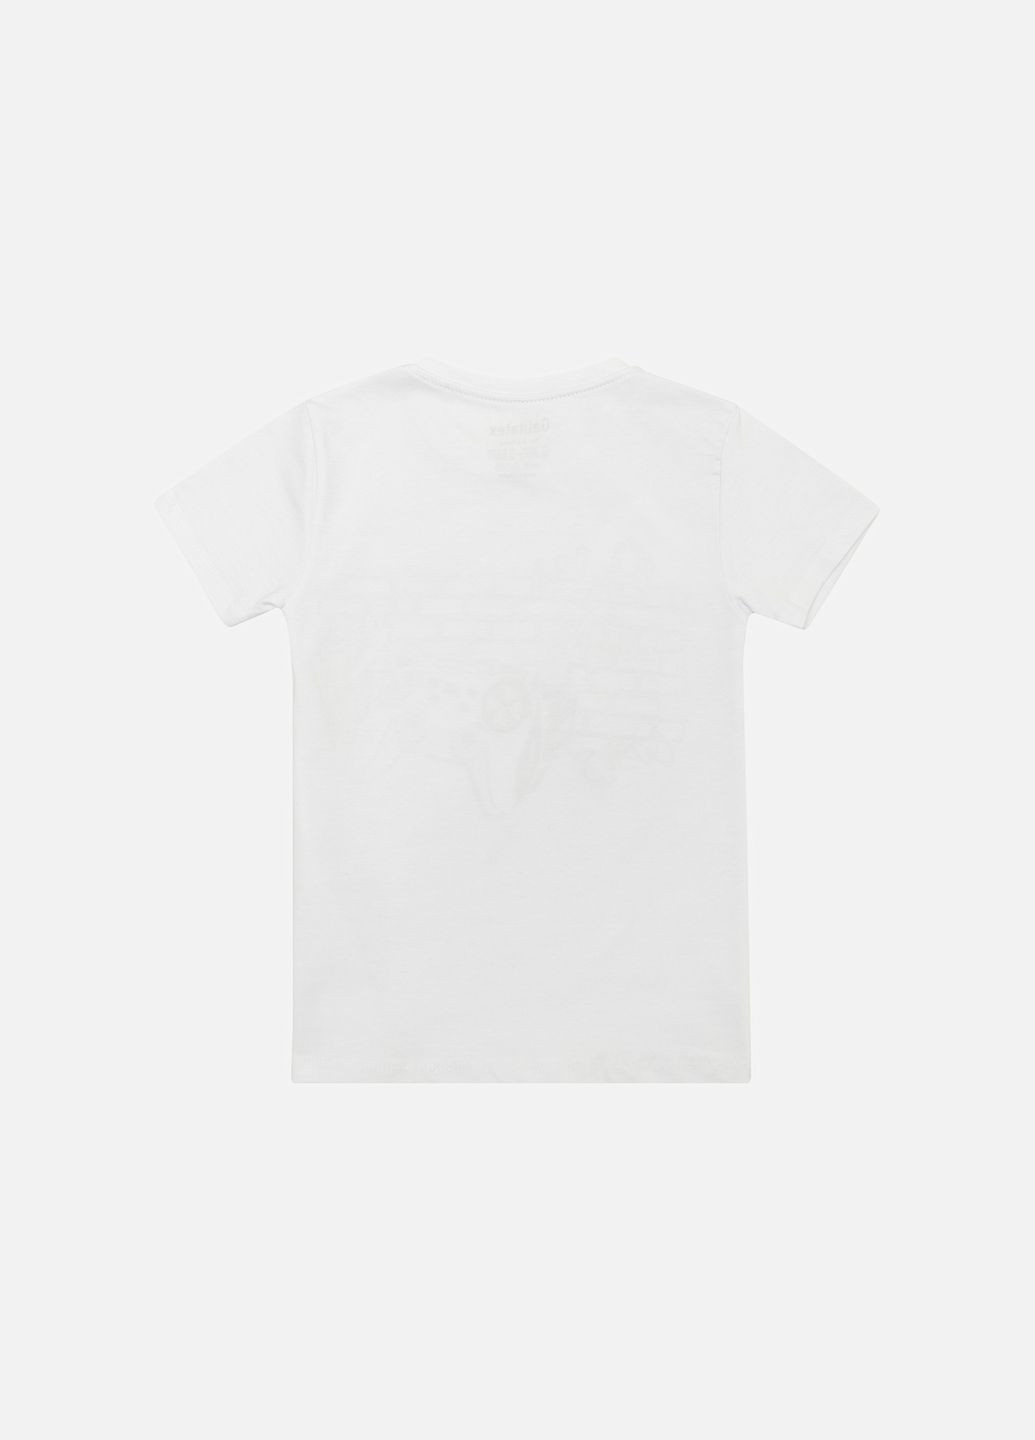 Белая летняя футболка для мальчика цвет белый цб-00223101 Galilatex